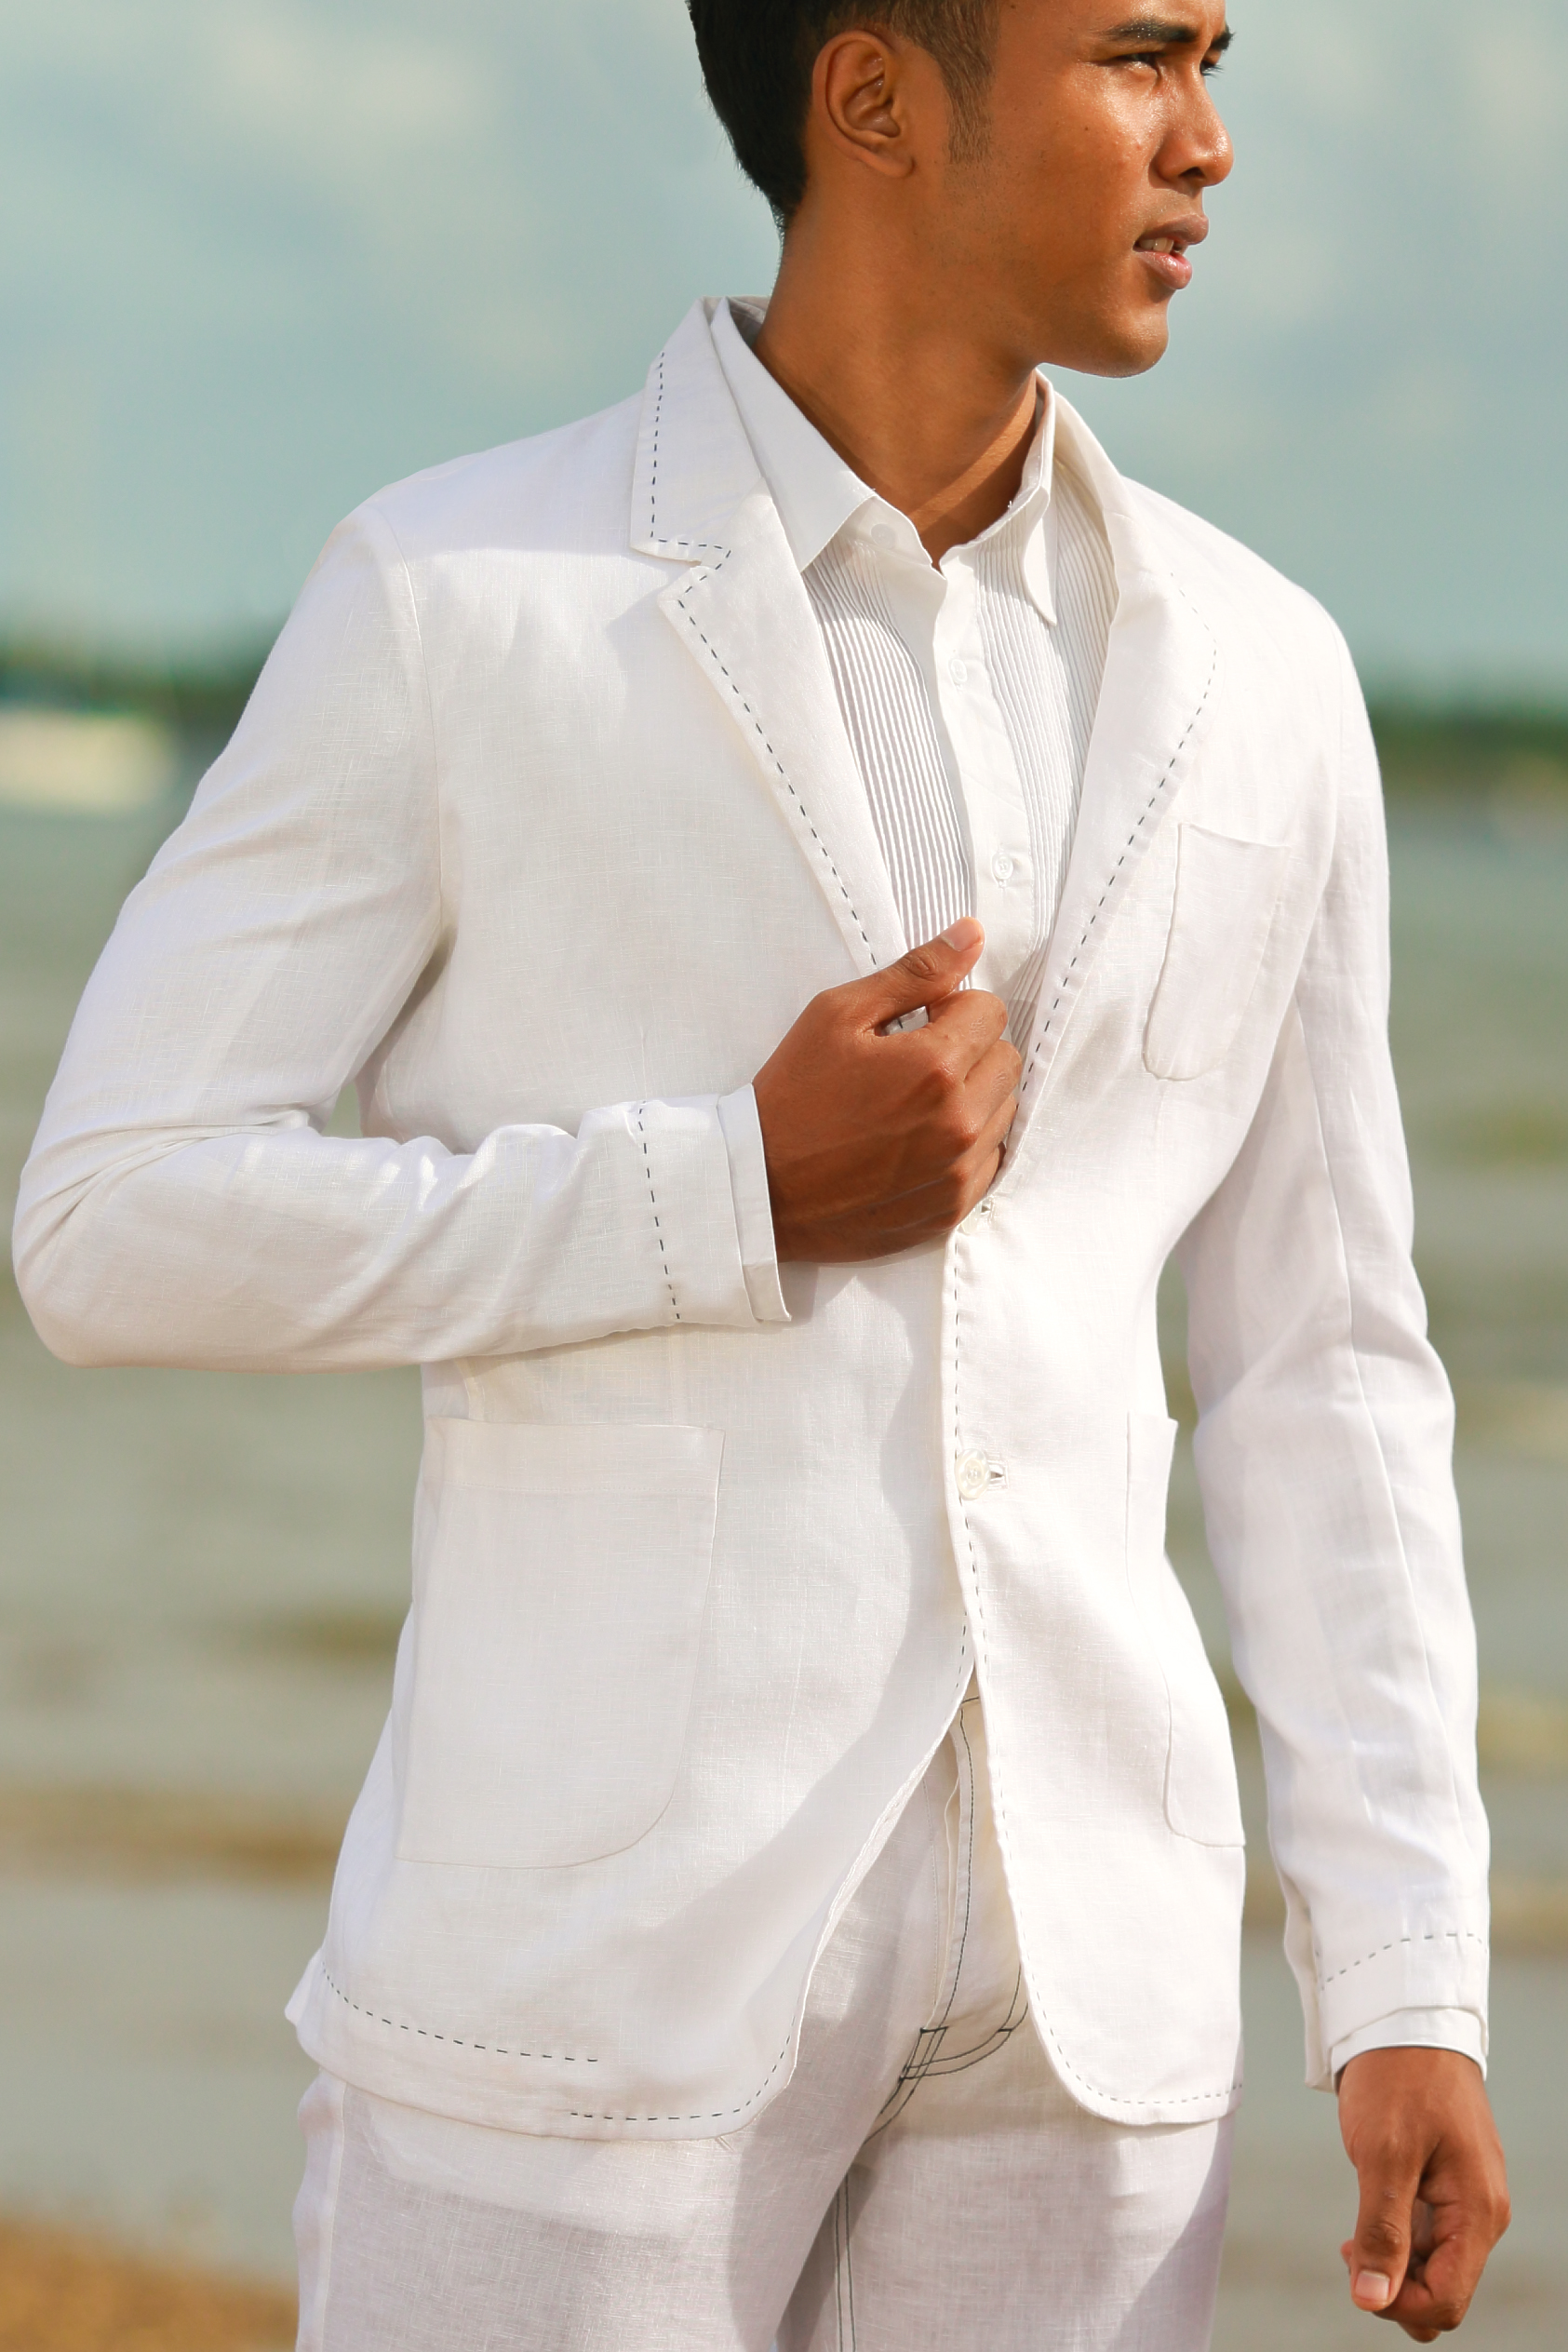 https://www.islandimporter.com/images/P/mens-custom-linen-jacket-for-beach-wedding-and-grooms.jpg